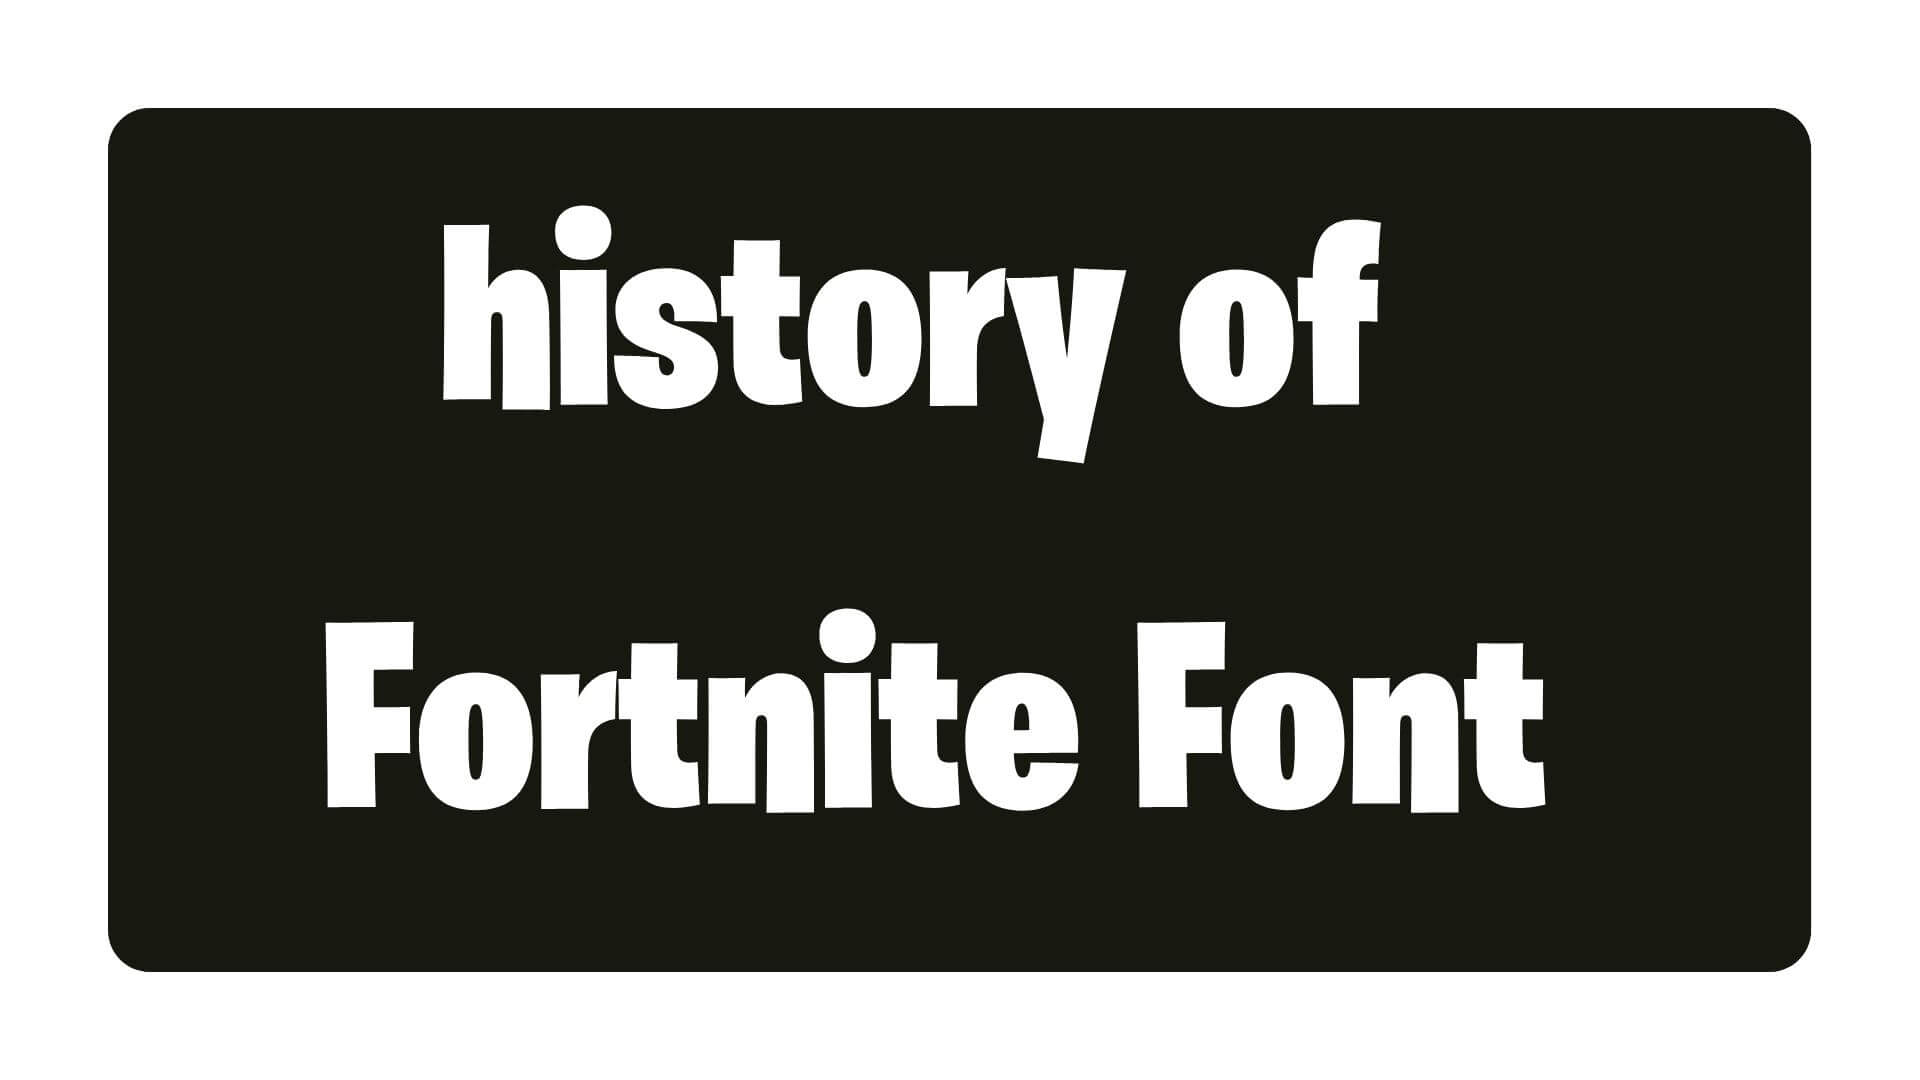 History of Fornite Fon